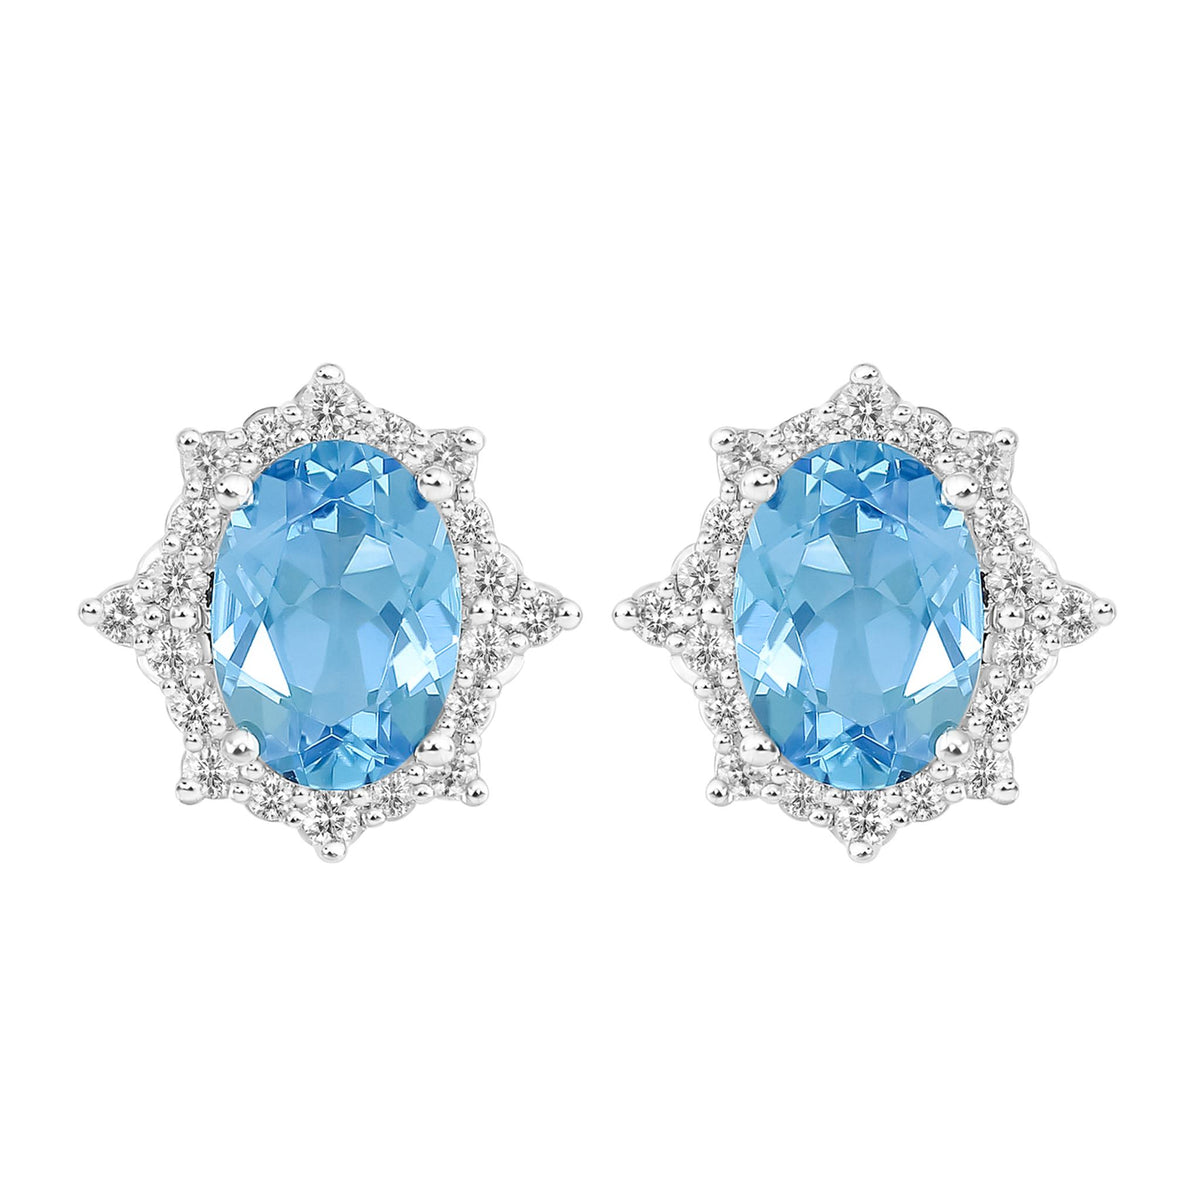 14Kt White Gold Halo Earrings Gemstone Earrings With 1.83ct Blue Topaz